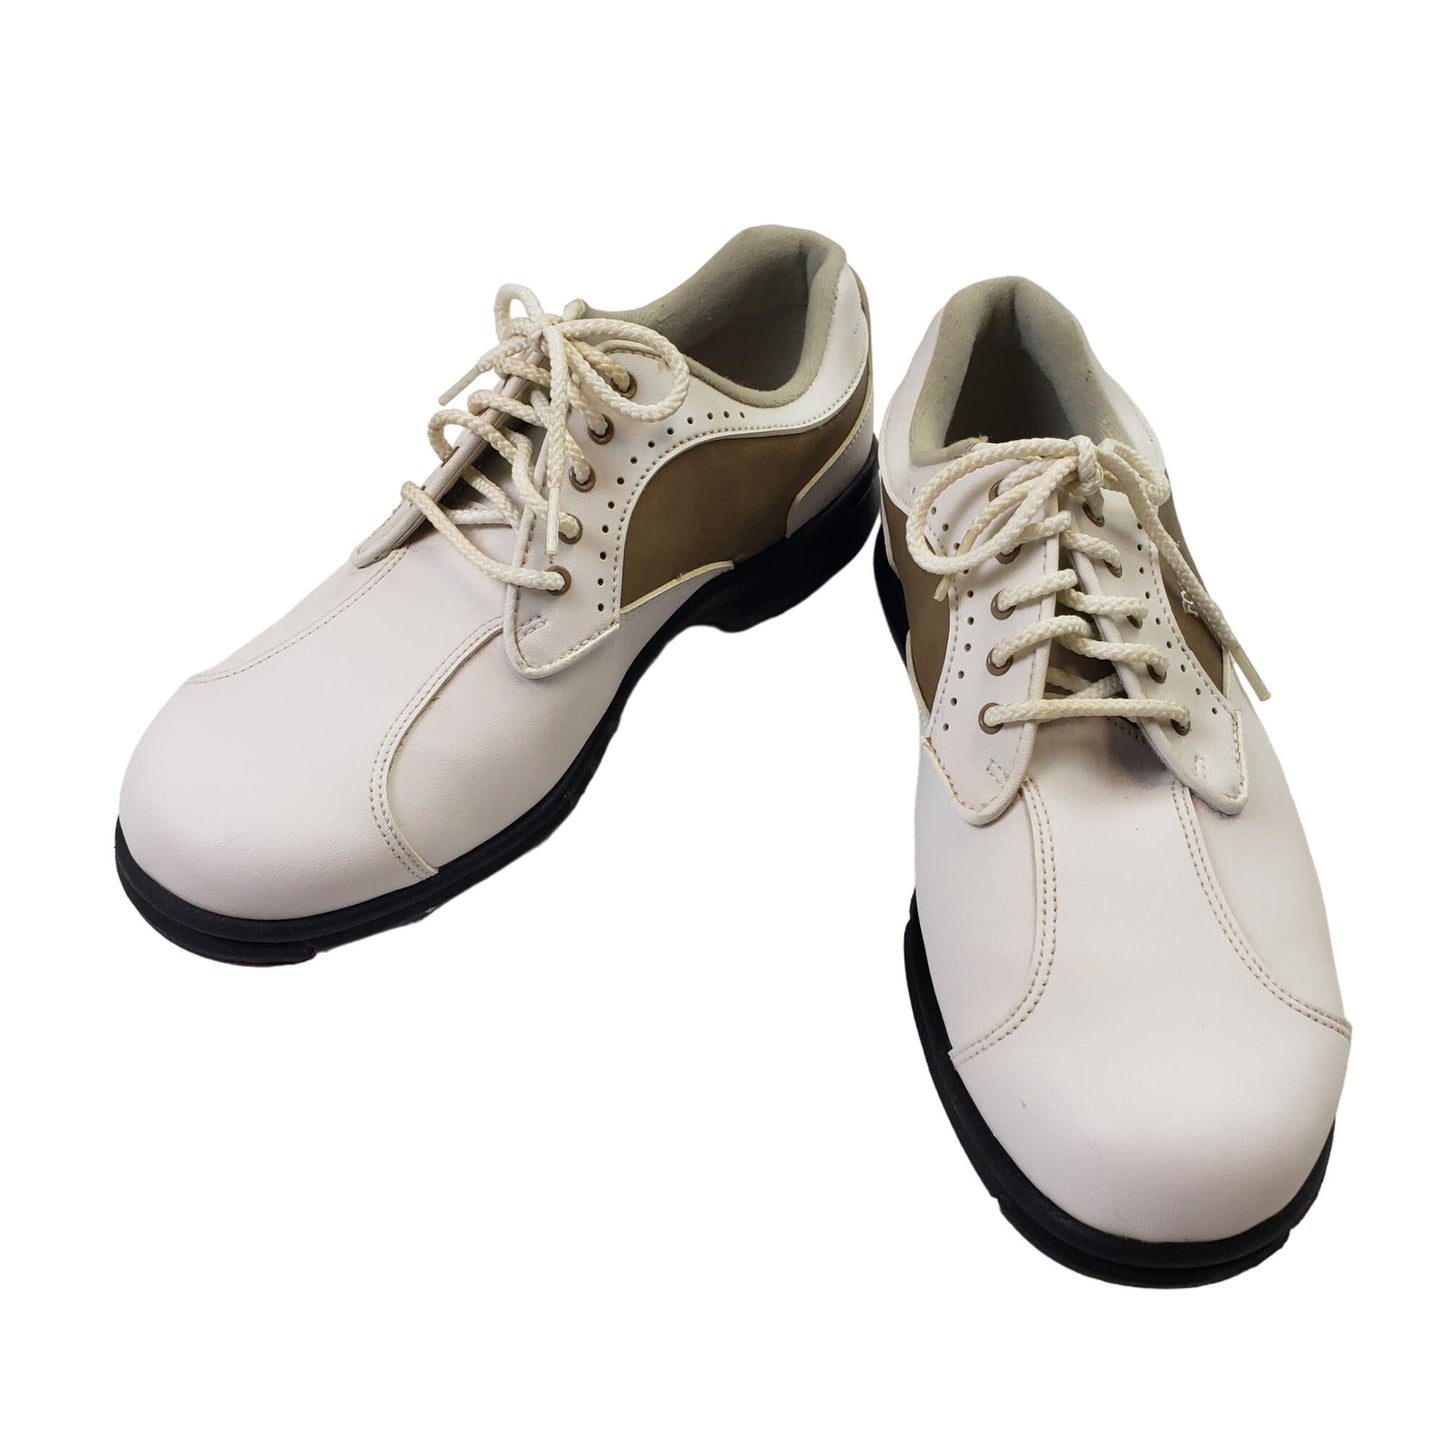 Footjoy Greenjoys White & Brown Golf Shoes Size 8.5